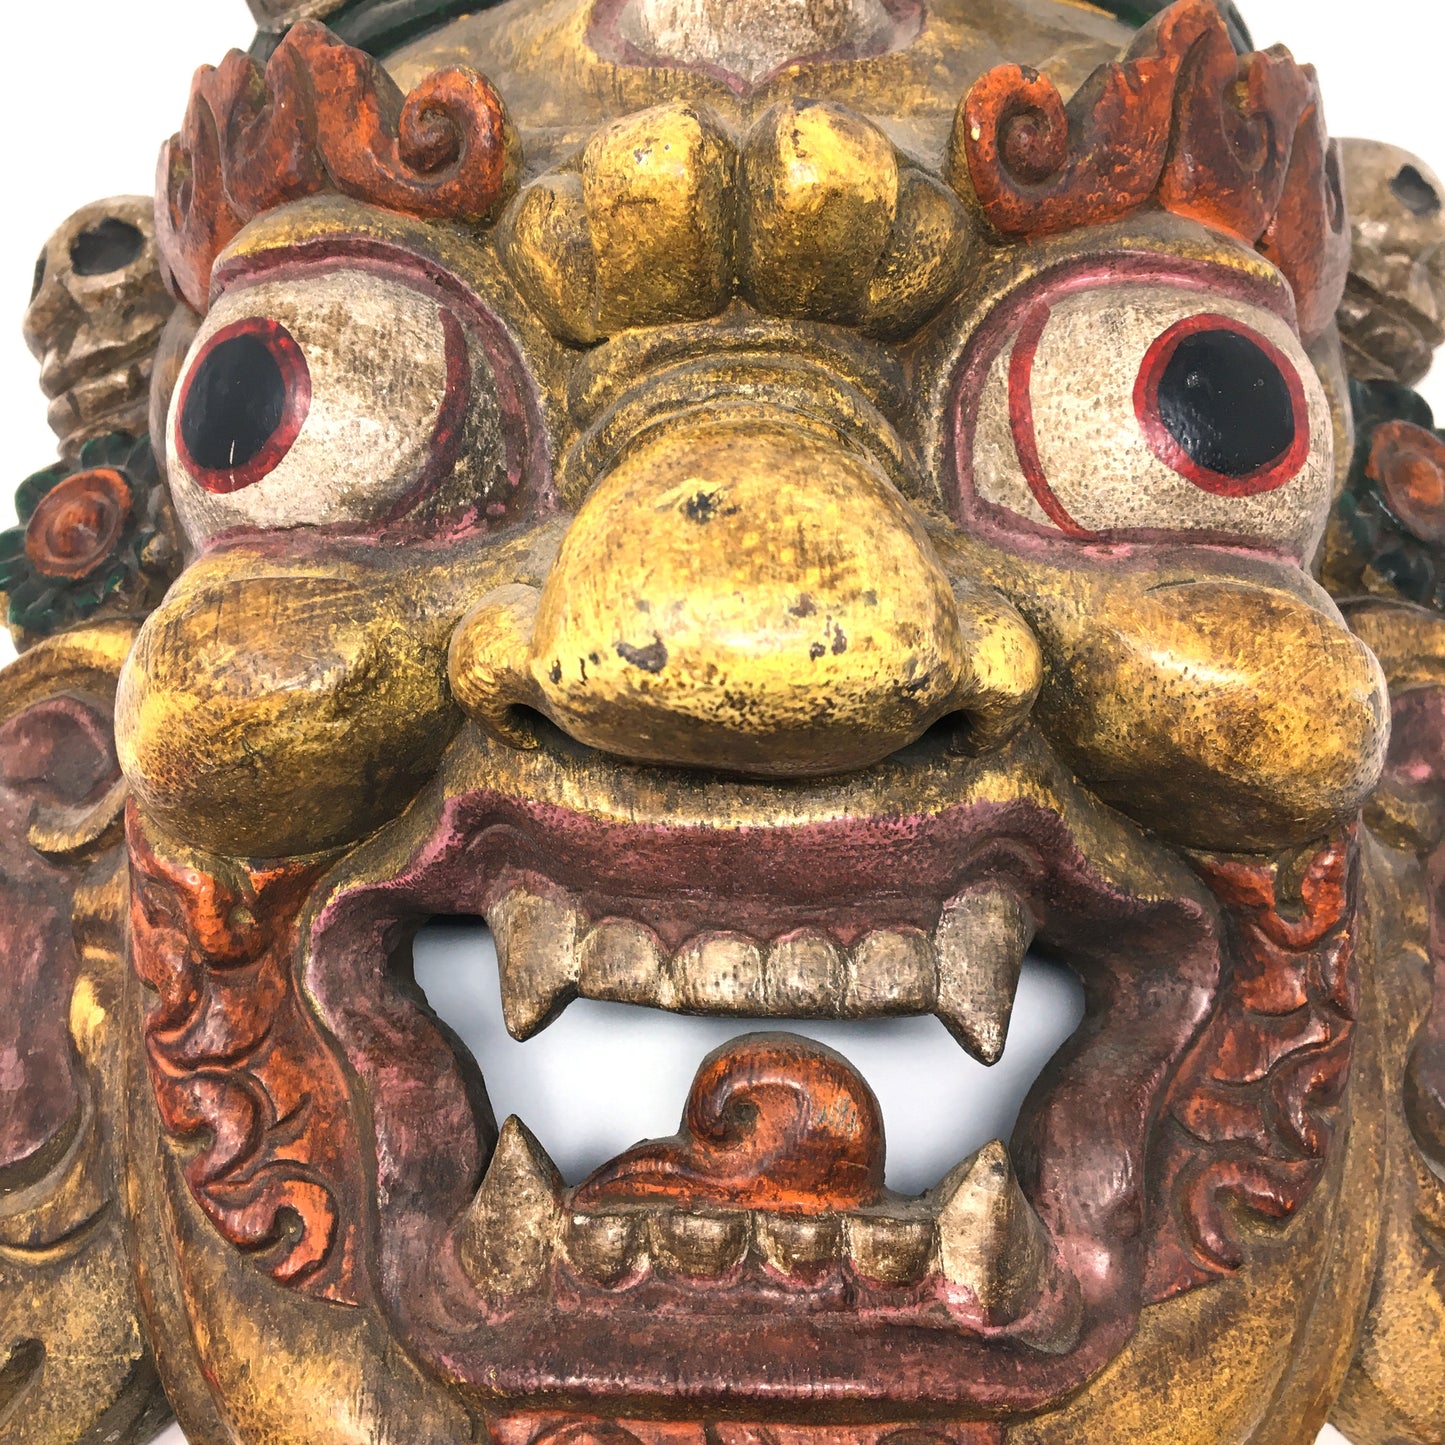 Wood Carving Buddhism Mahakala Mask Wall Plaque Hanging - Nepal Handmade 14"